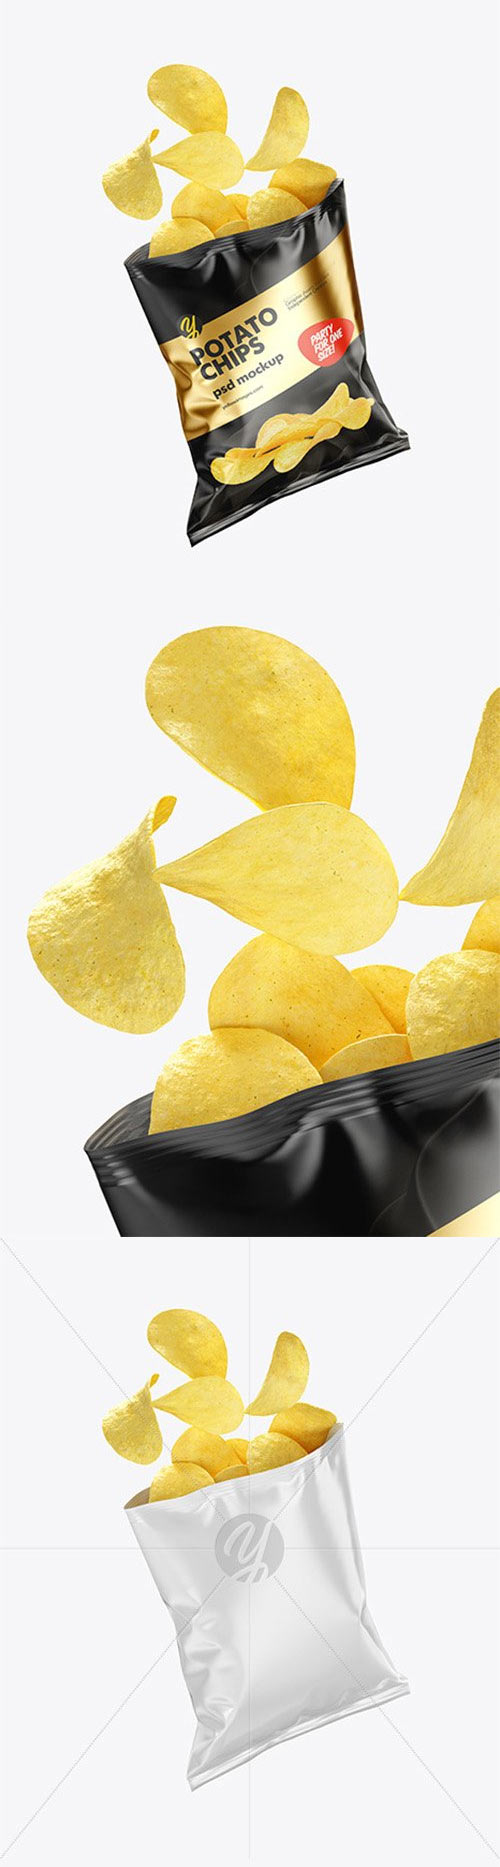 Glossy Bag w/ Chips Mockup